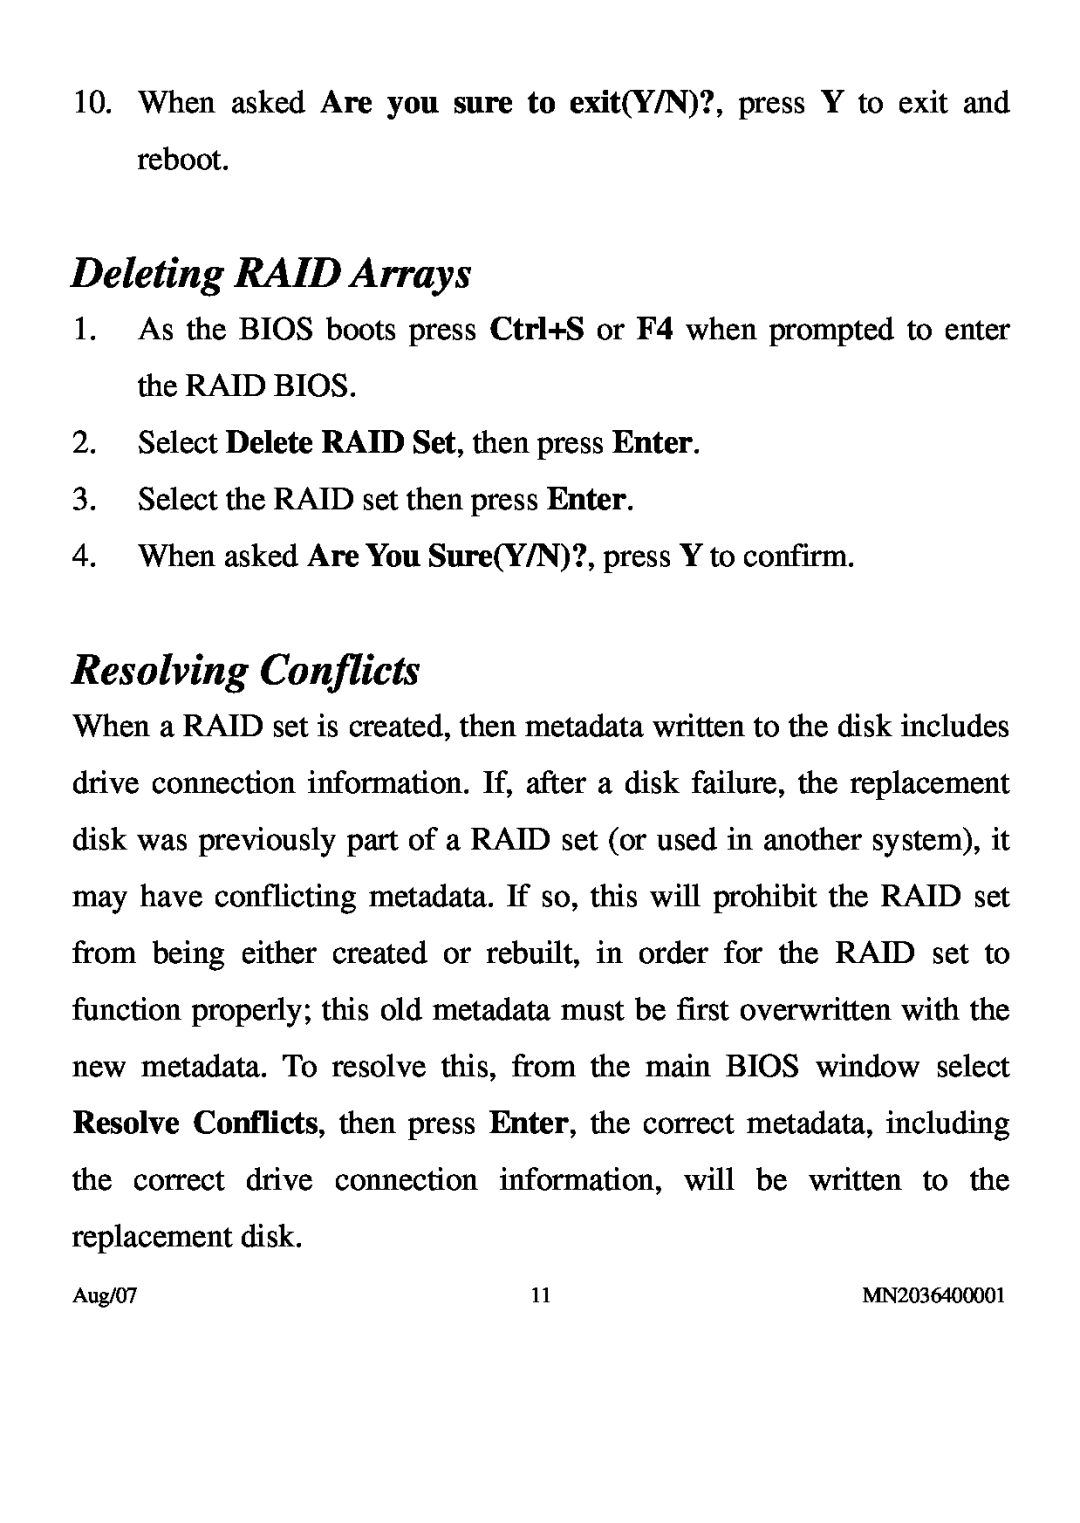 PNY P-DSA2-PCIE-RF user manual Deleting RAID Arrays, Resolving Conflicts 